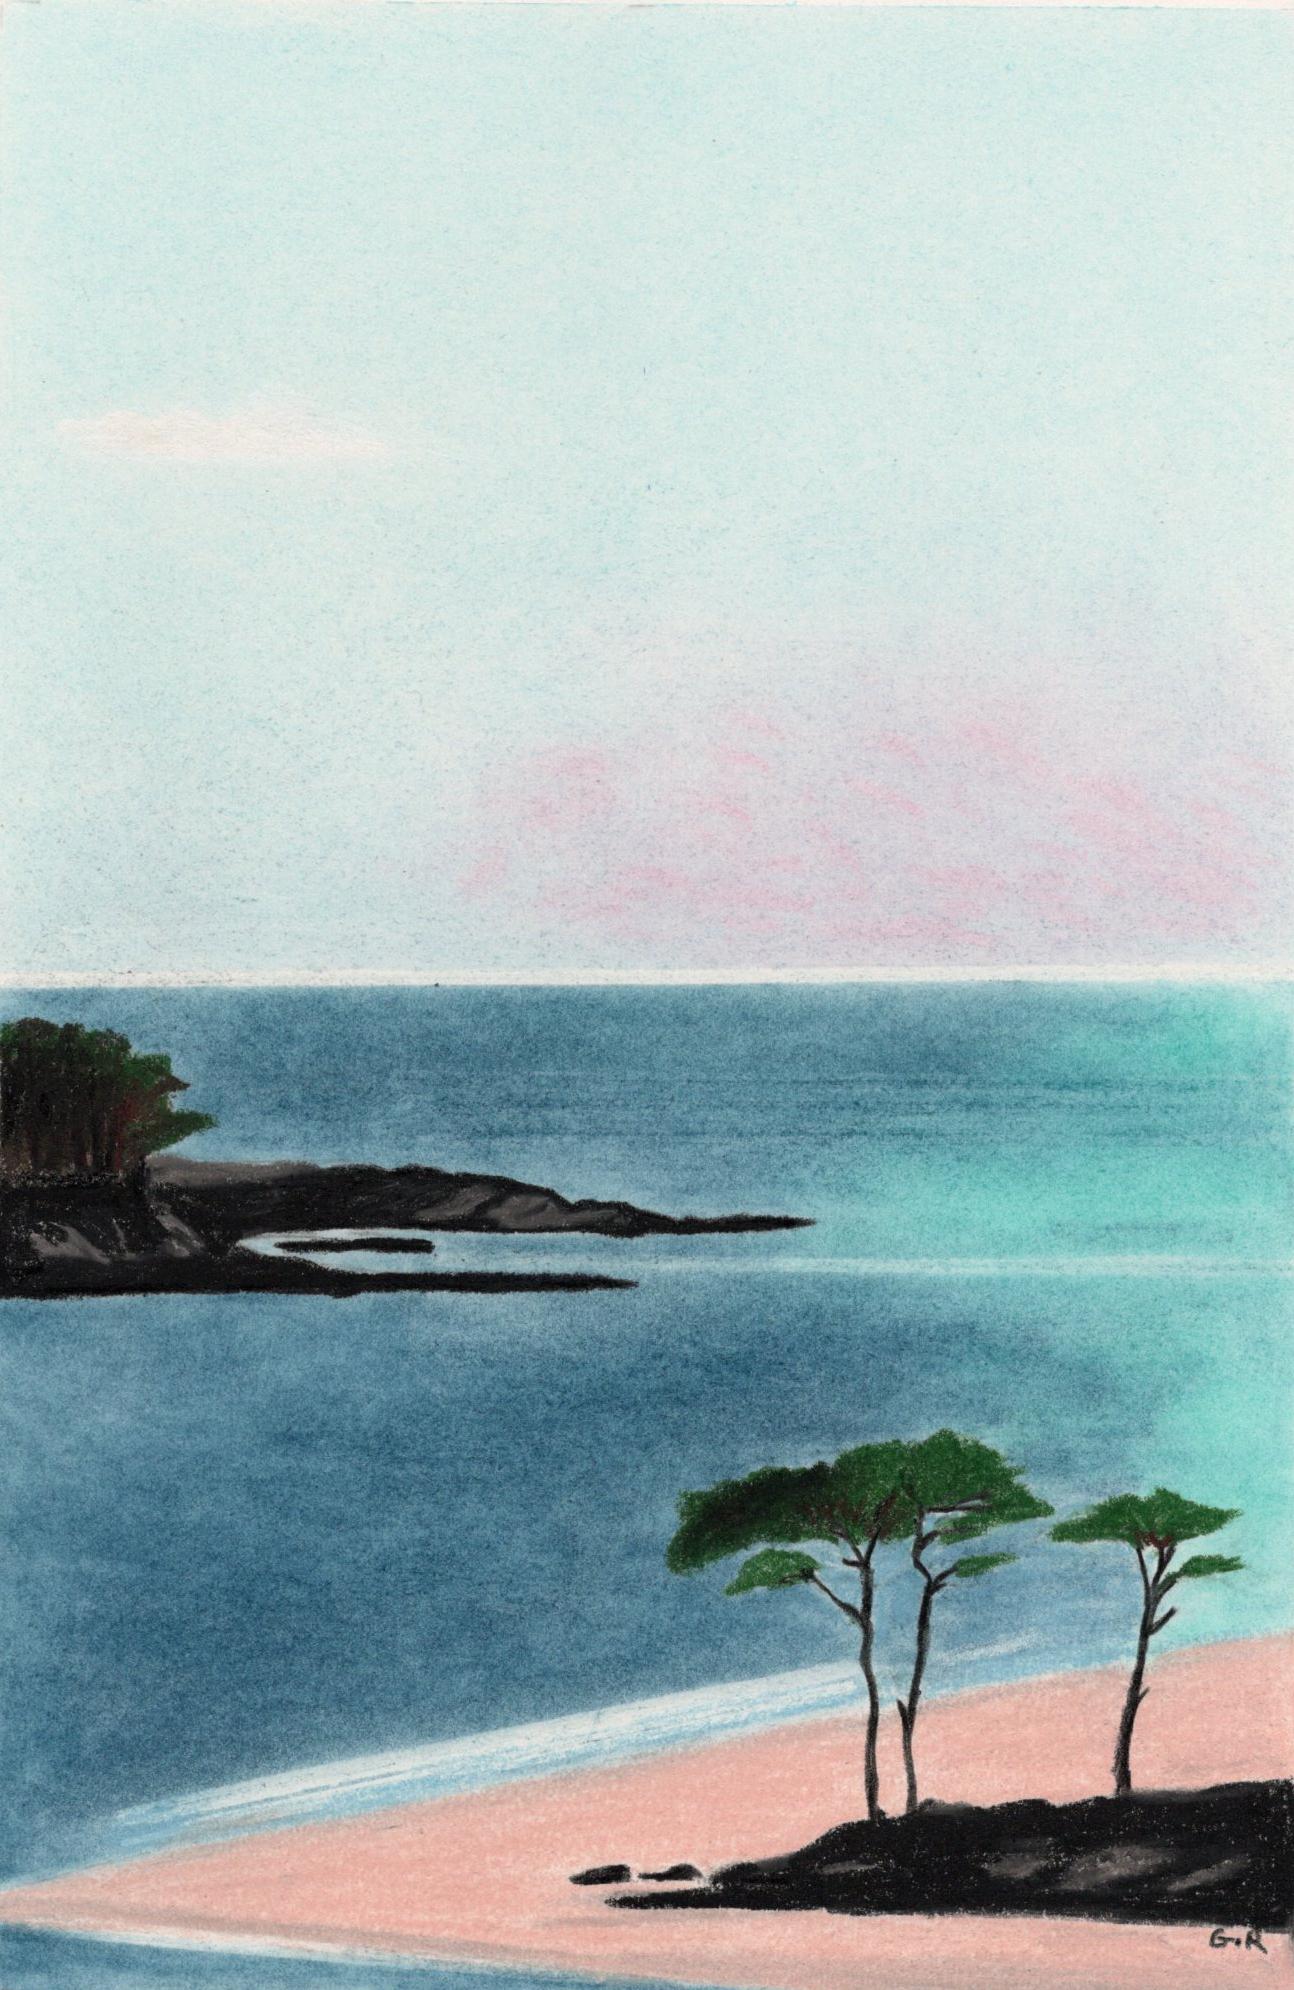 Landscape Art Gabriel Riesnert - Paysage Minimal, dessin original au pastel, paysage marin, mer, plage